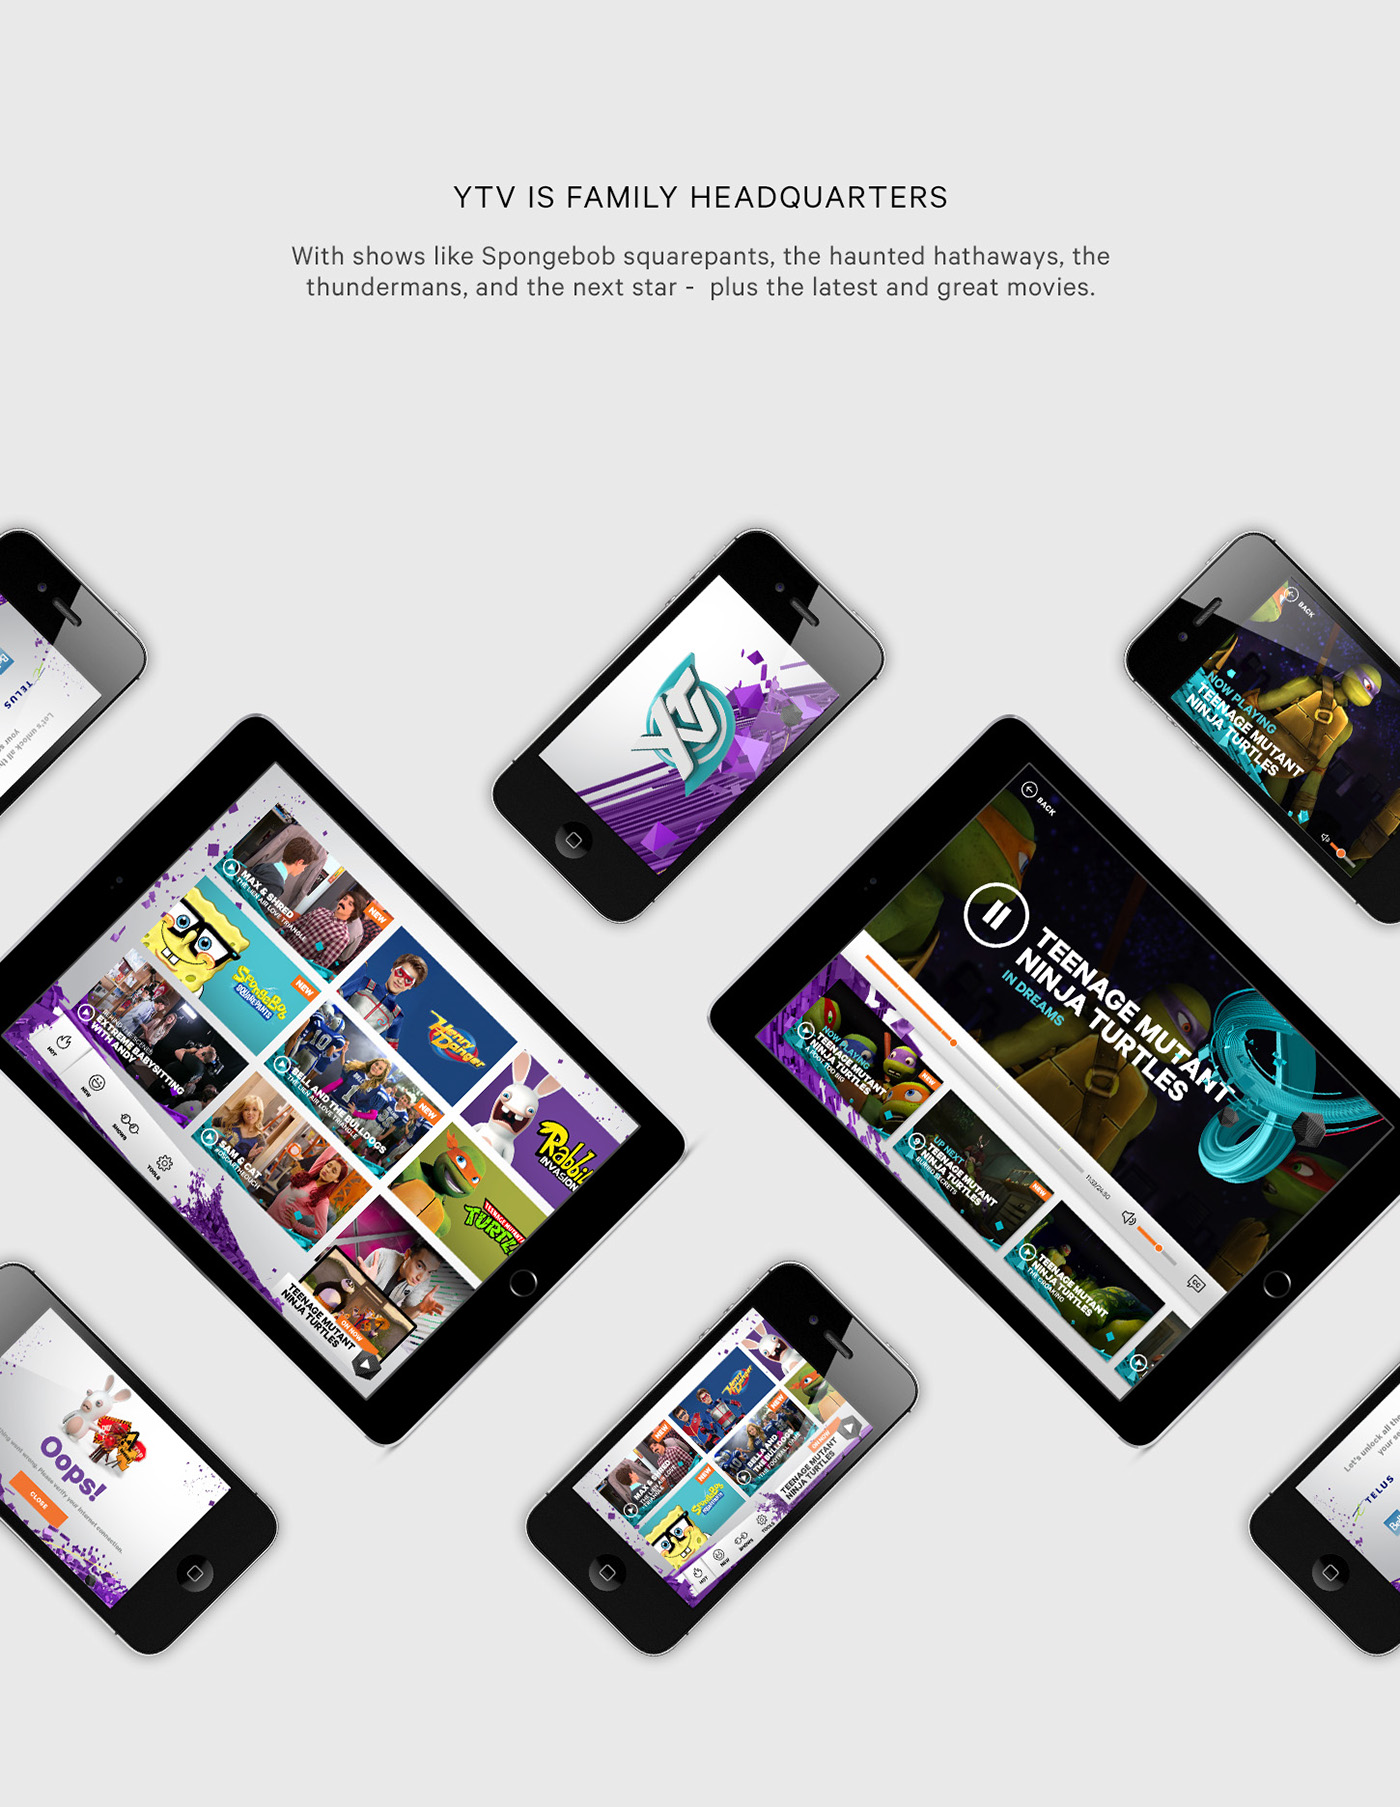 tablet television kids Streaming kids app Canada ottawa UI Live TV Corus Entertainment kids brand Platform design